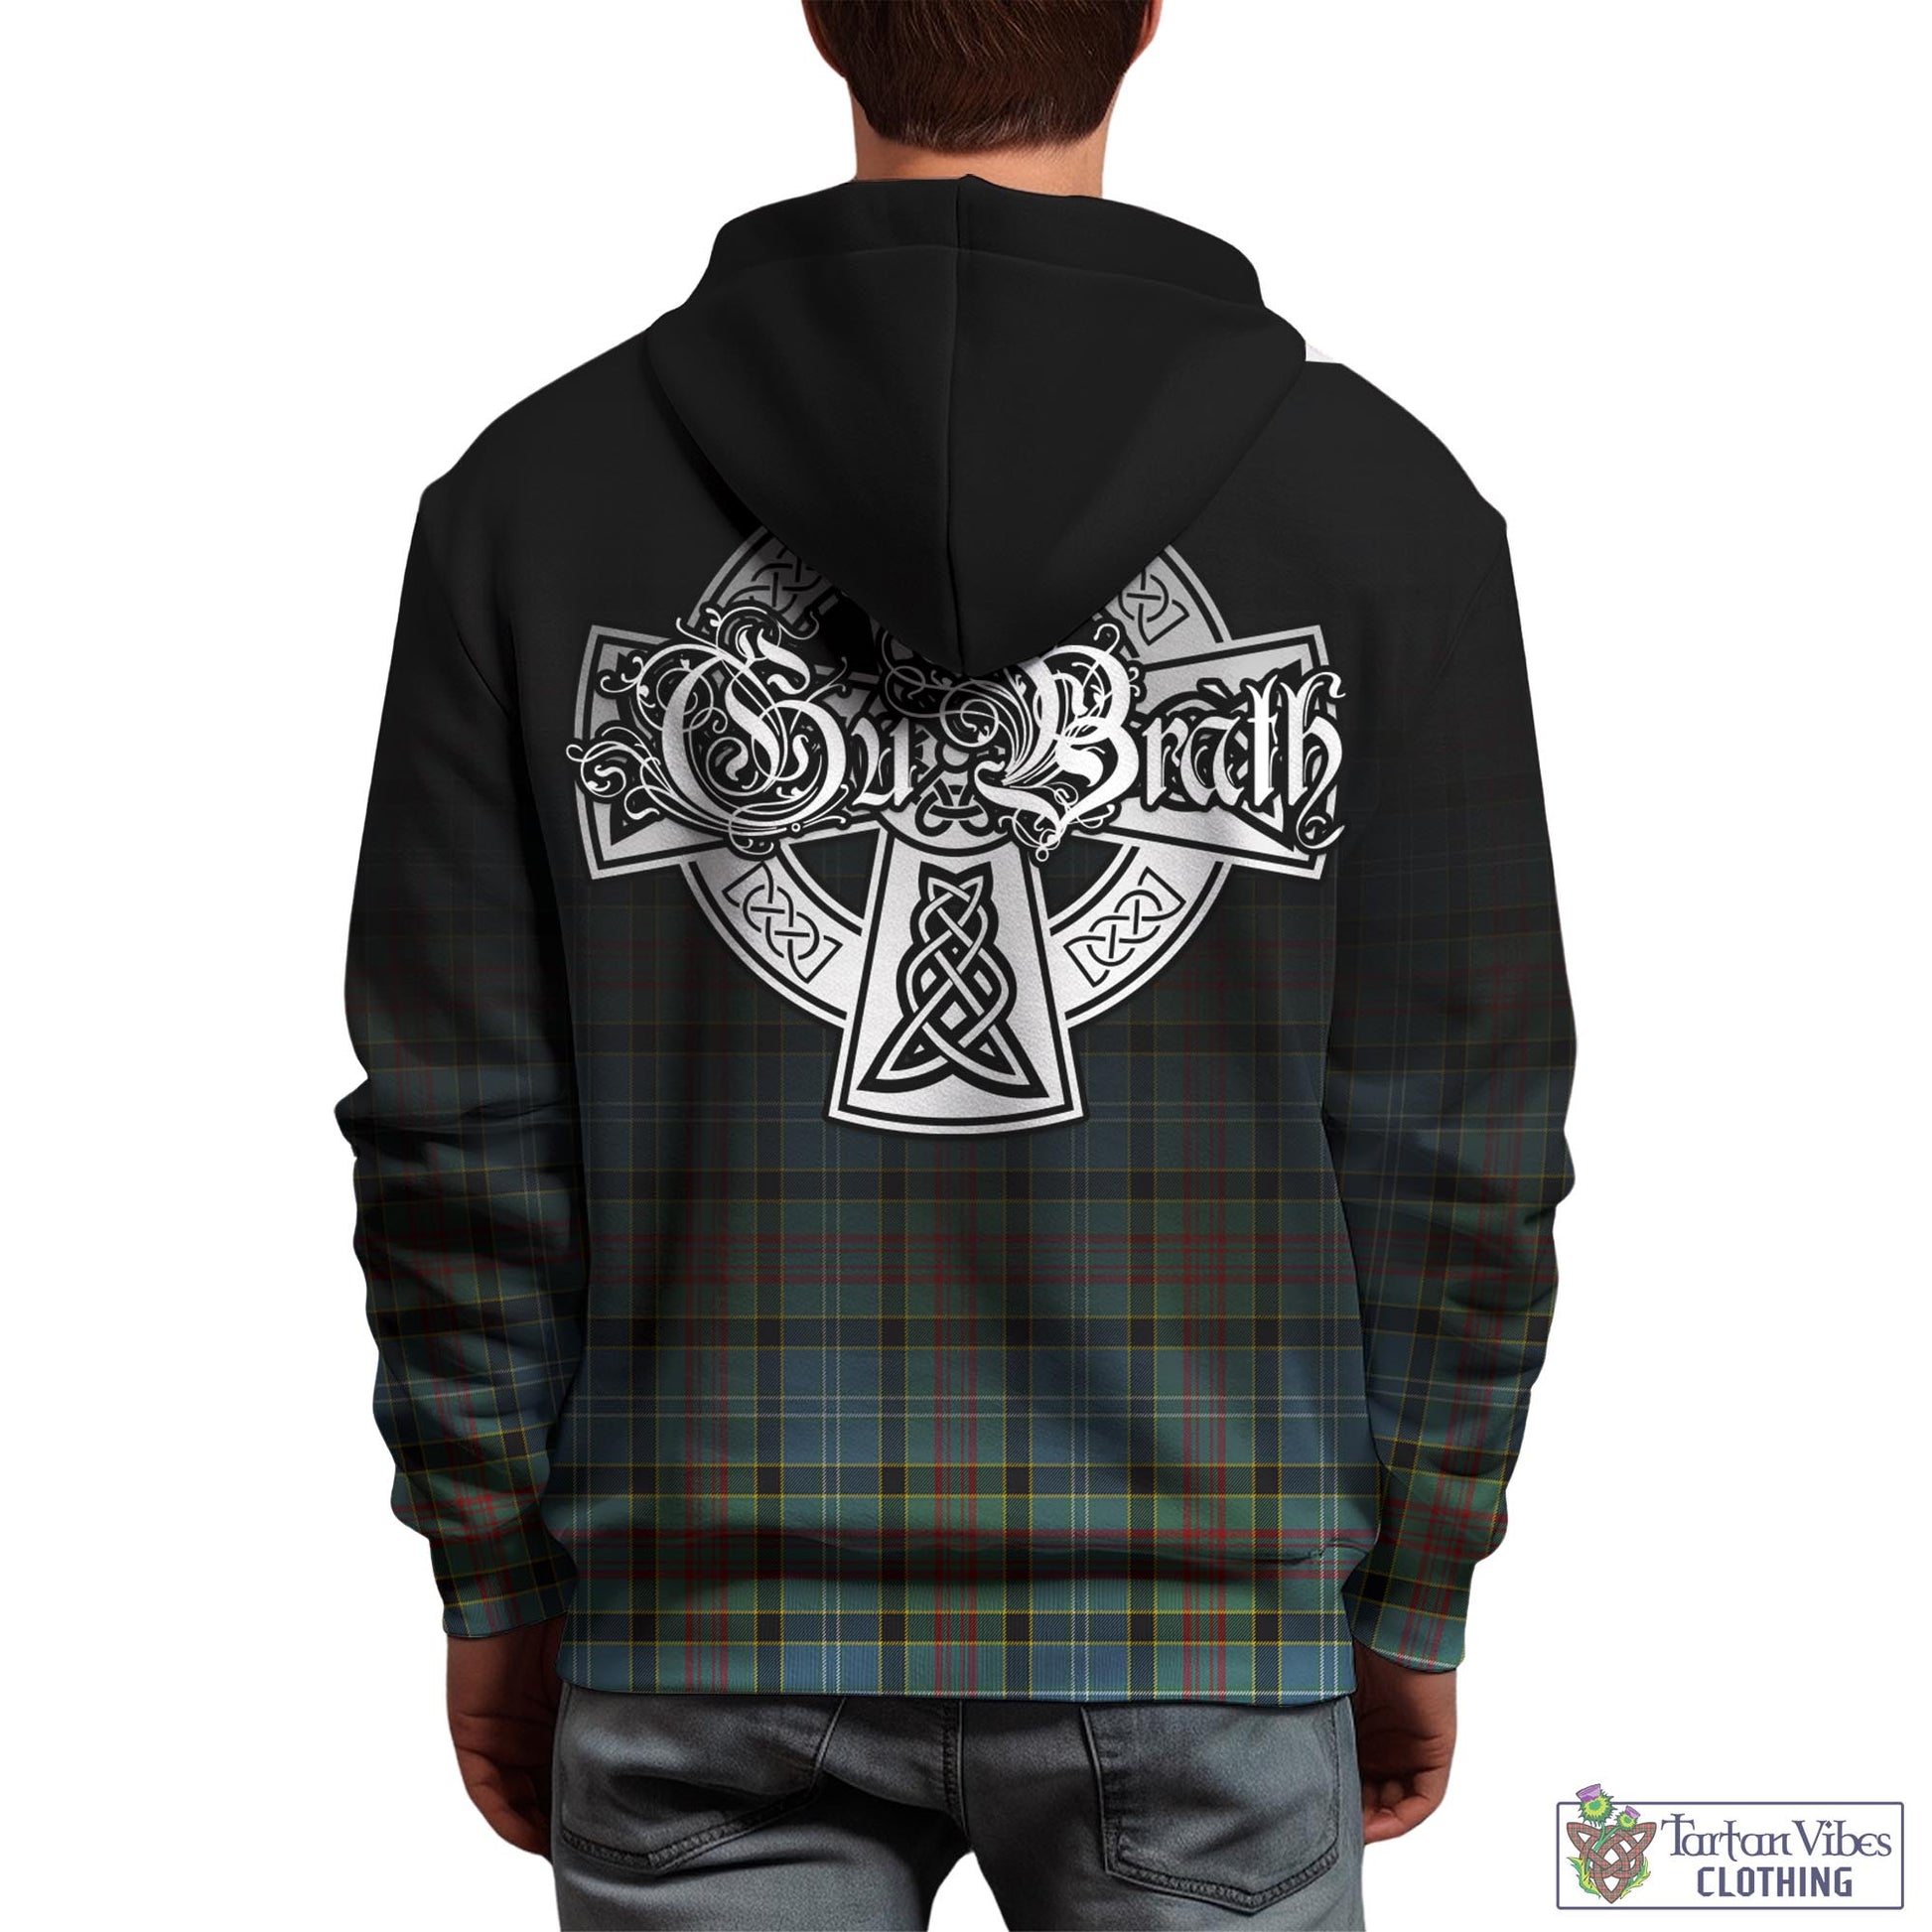 Tartan Vibes Clothing Cathcart Tartan Hoodie Featuring Alba Gu Brath Family Crest Celtic Inspired